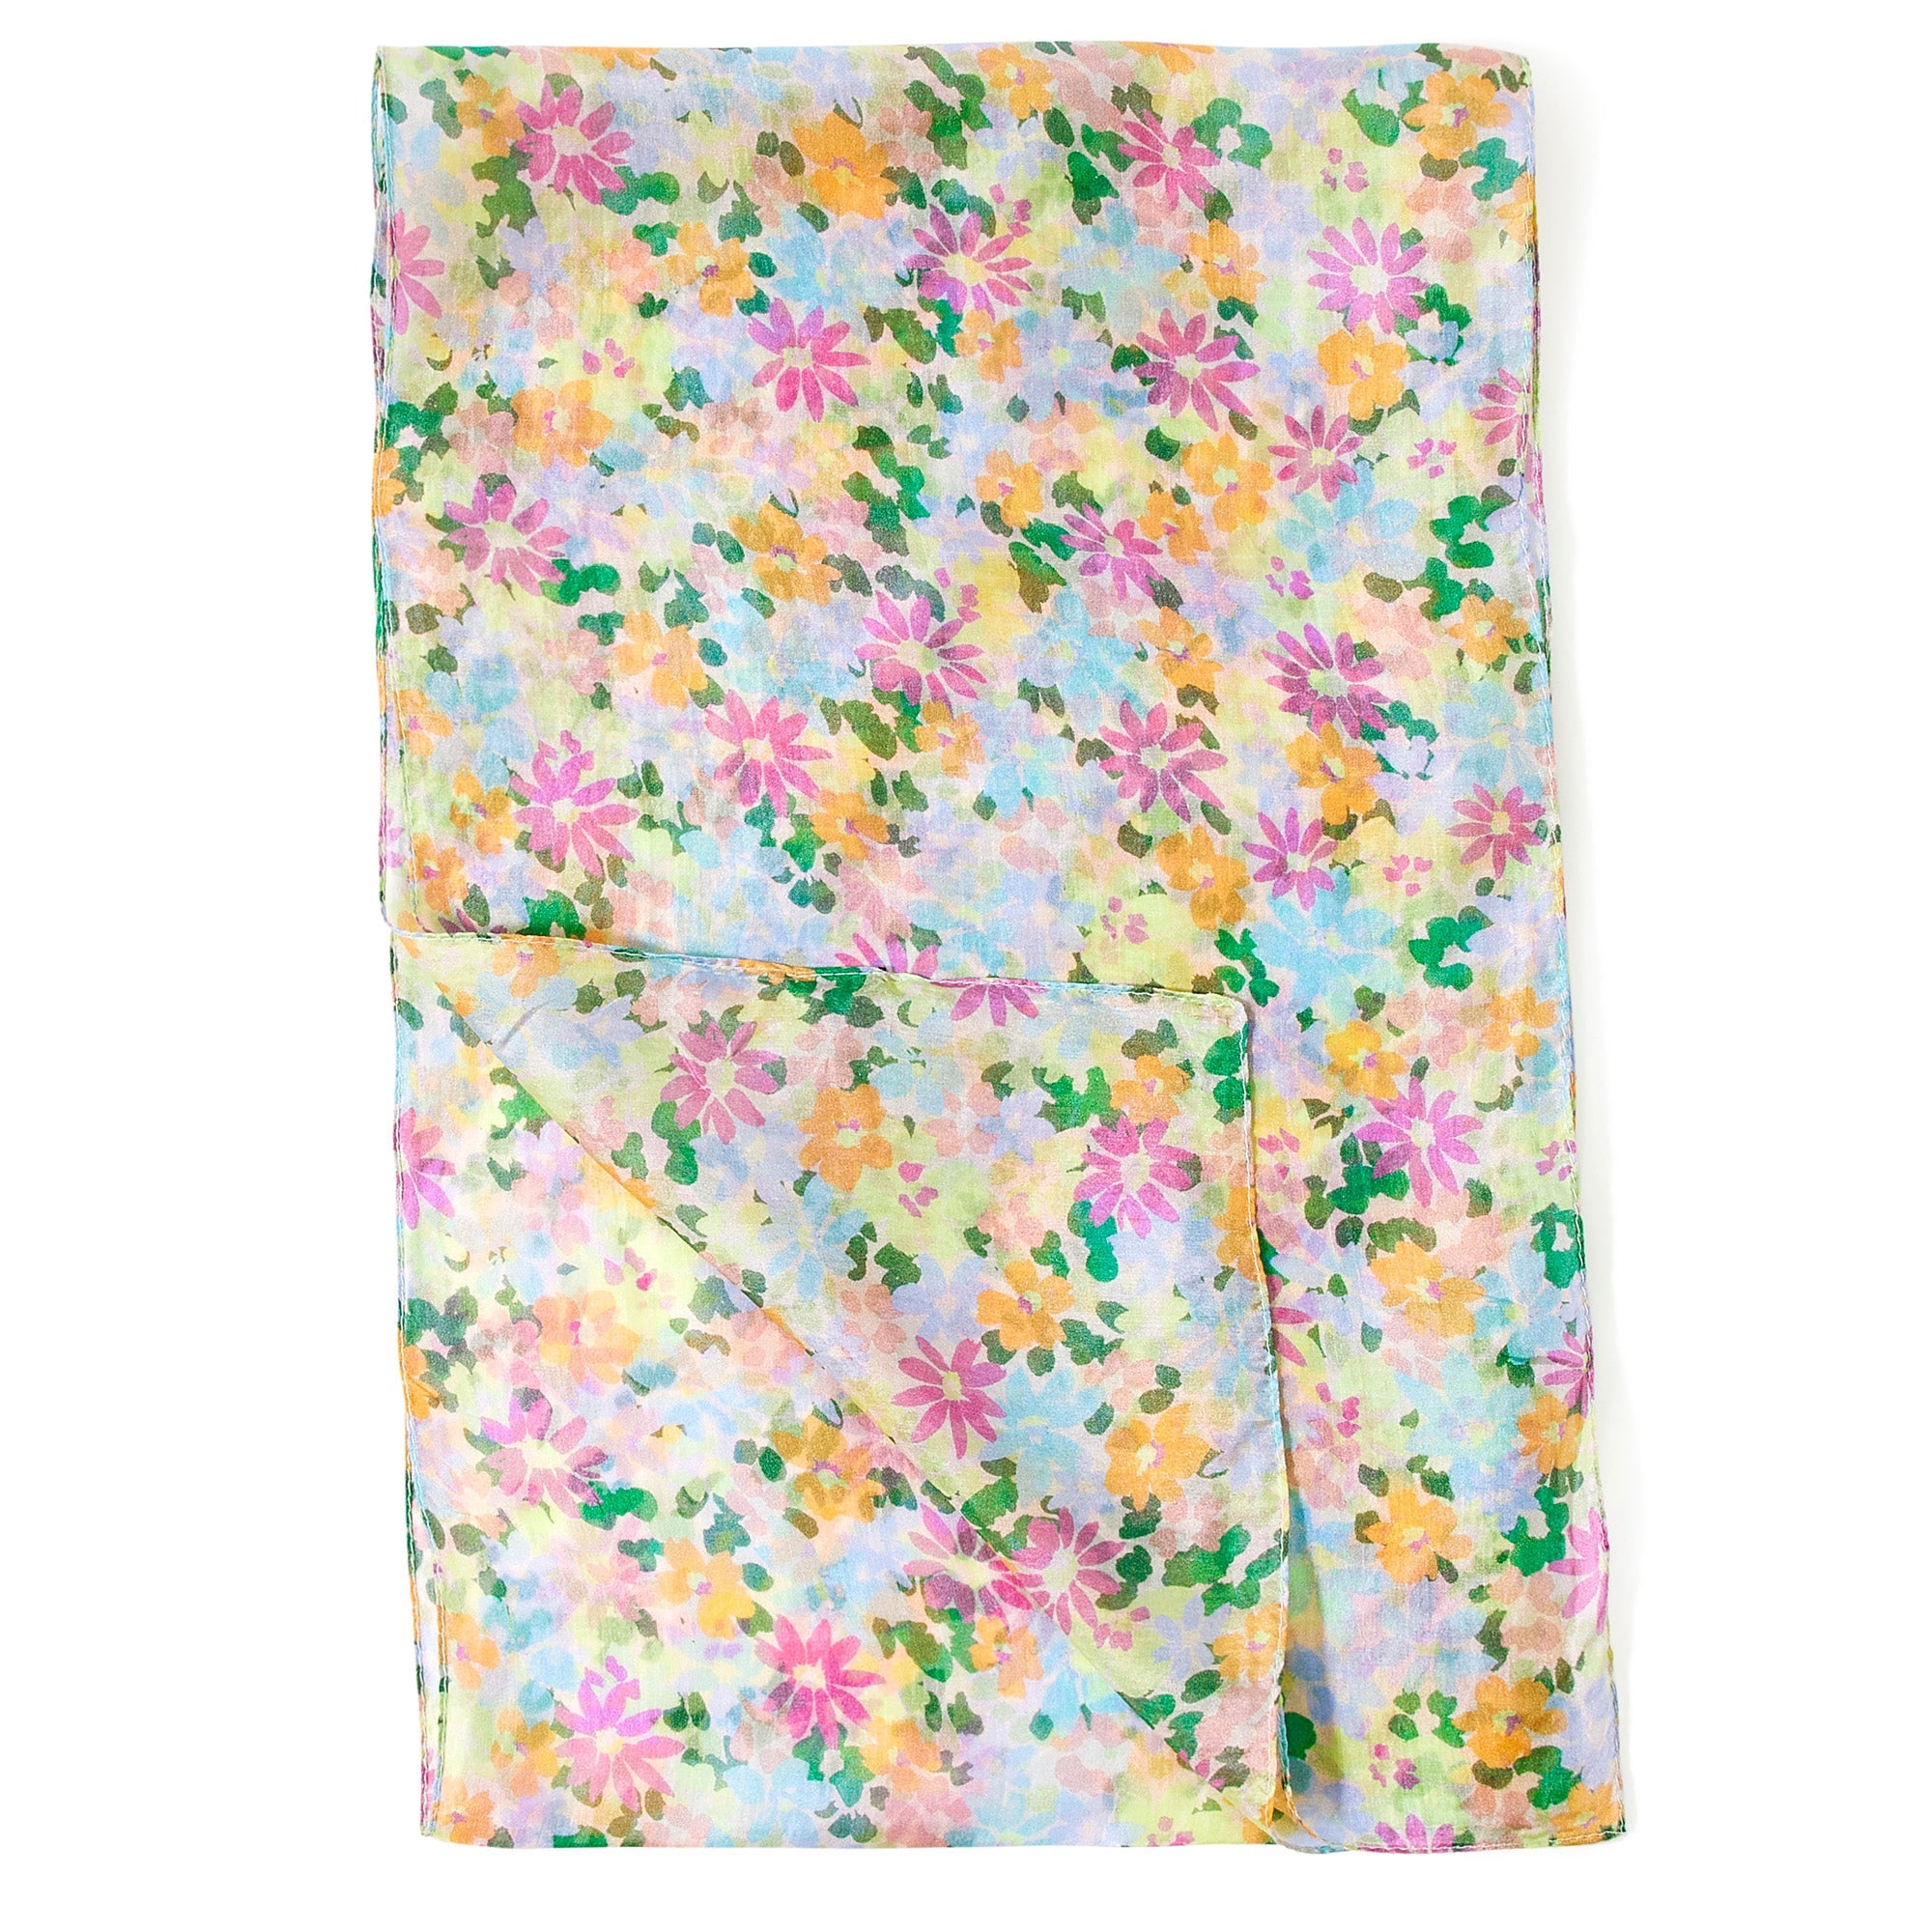 Accessorize London Women's Bright Floral Silk Scarf